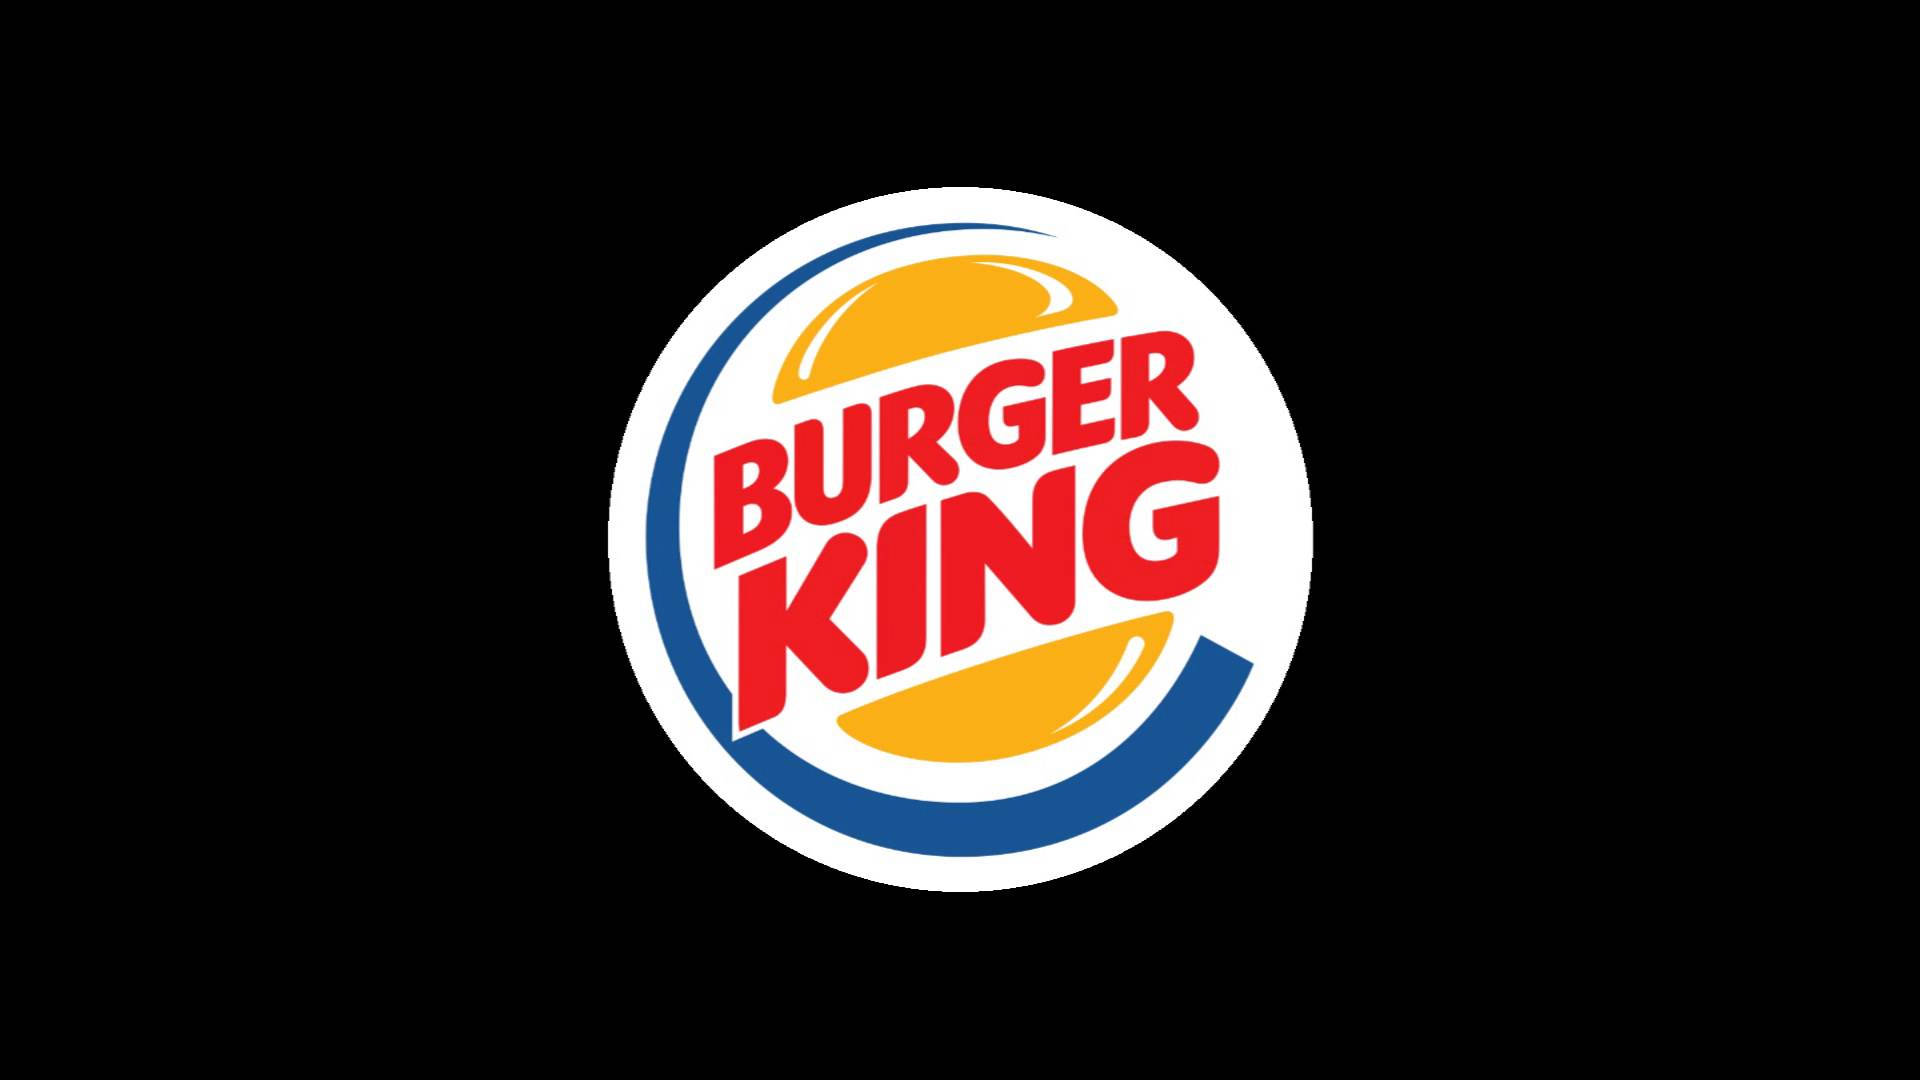 Burger King Logo On Black Background